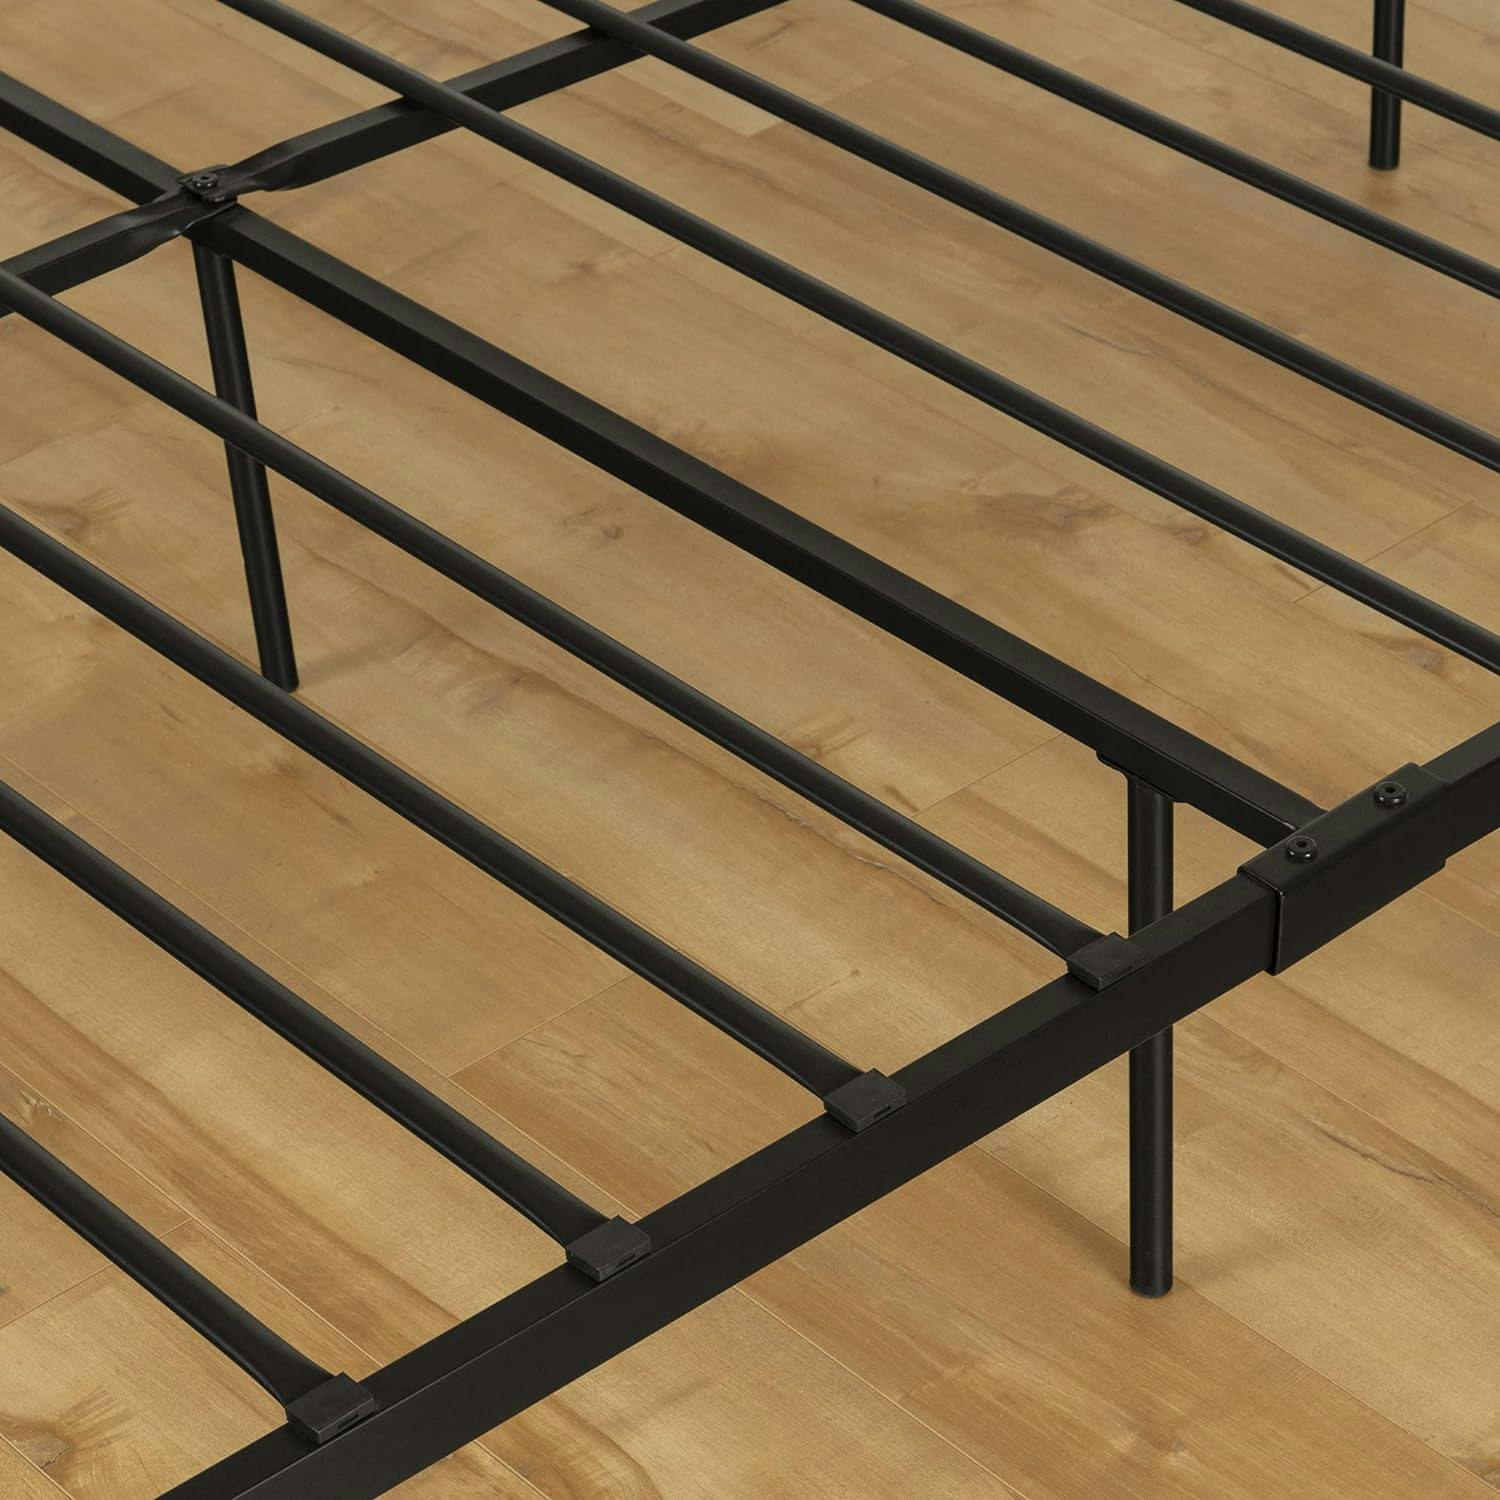 Sazena Full Matte Black Geometric Metal Platform Bed